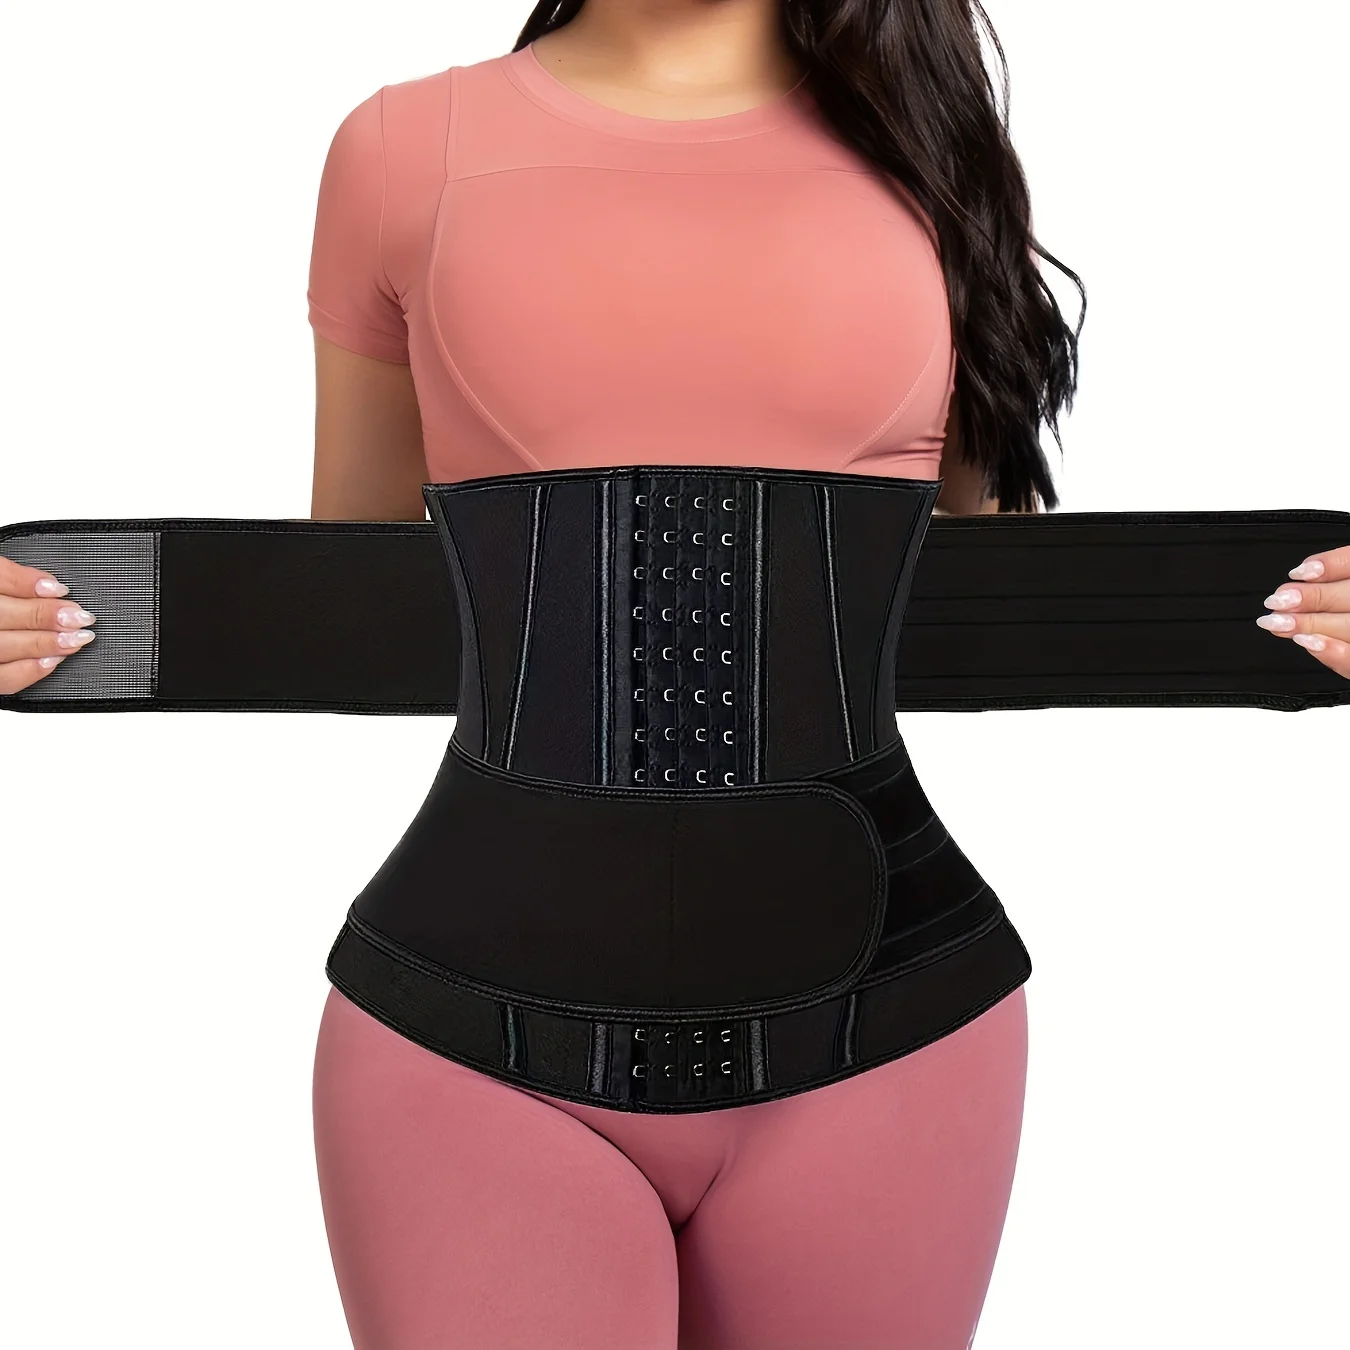 

Sauna Thermo Belt Neoprene Waist Trainer Body Shaper Shapewear Women Corset Sweat Fitness Girdle Flat Belly Slimming Sheath